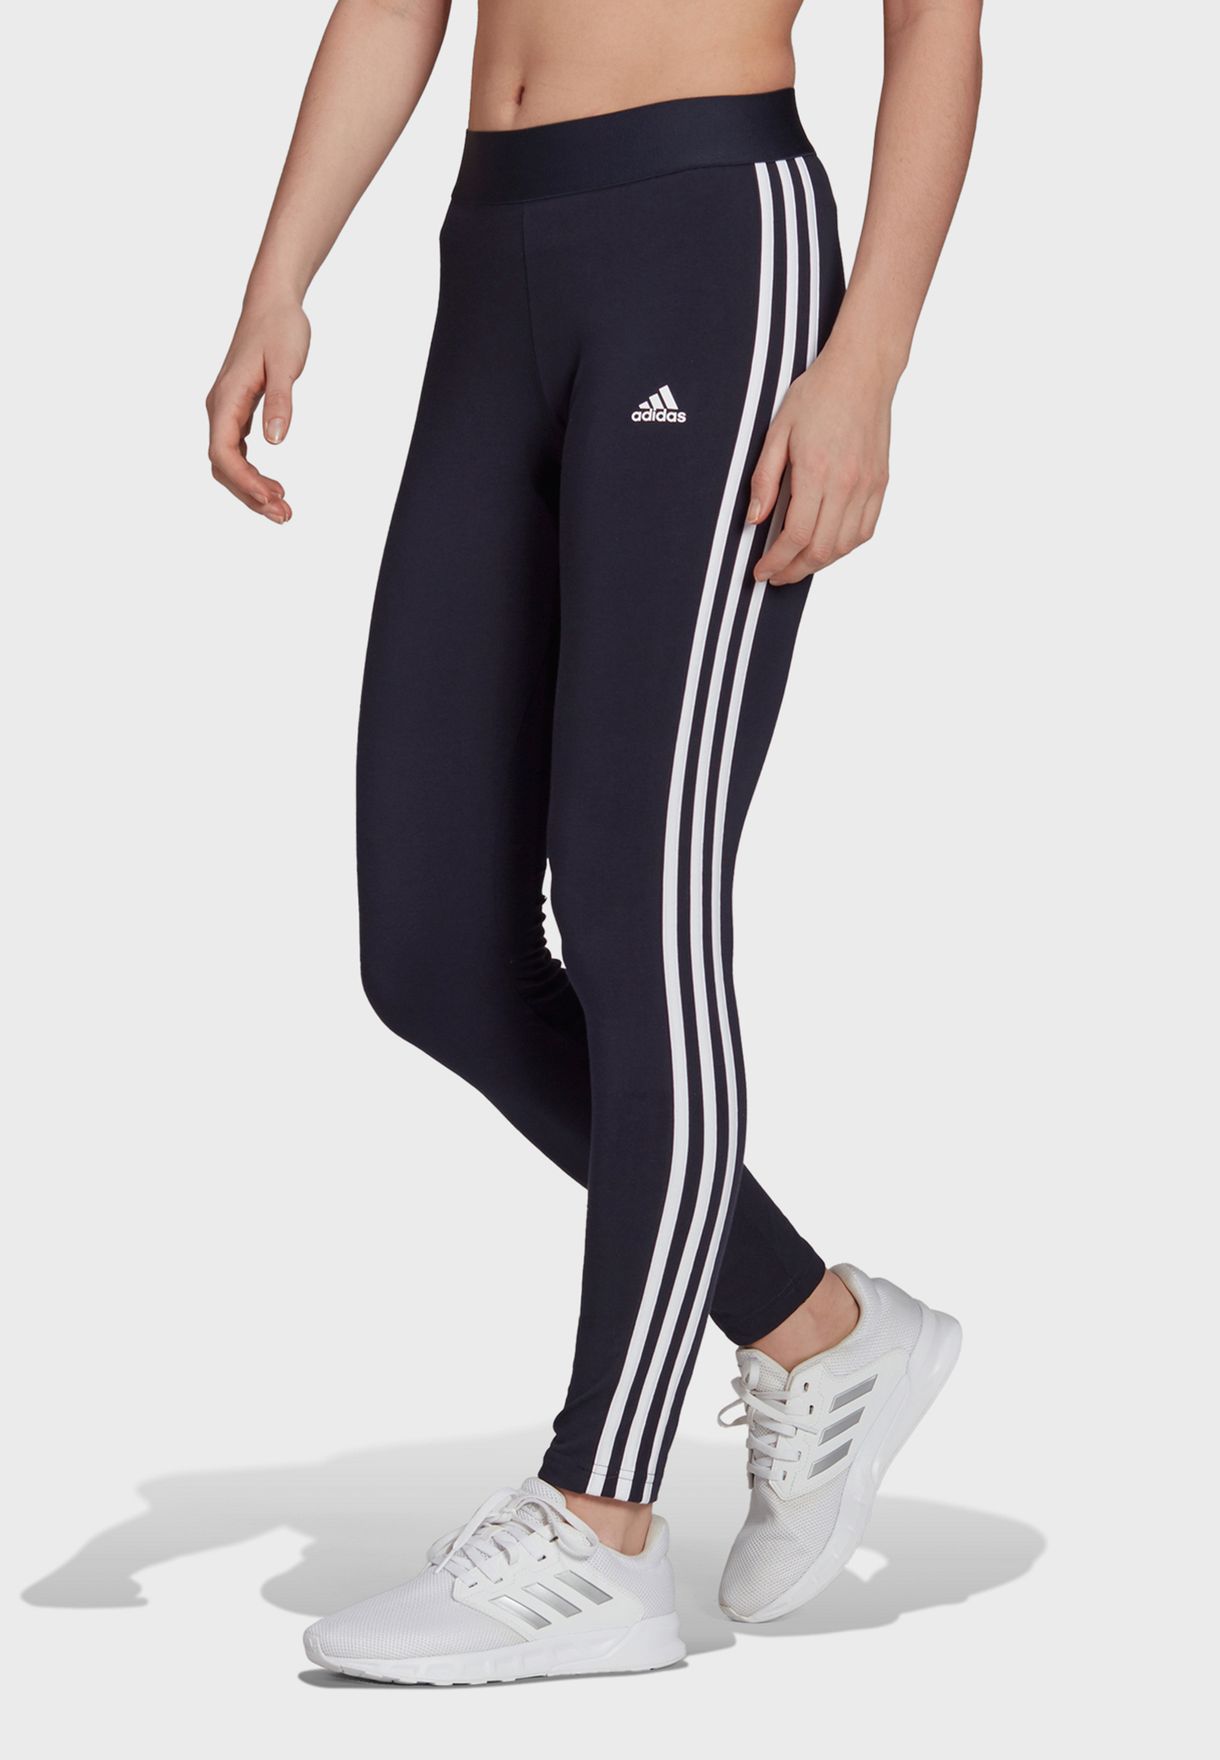 Buy > adidas 3 stripe leggings navy > in stock